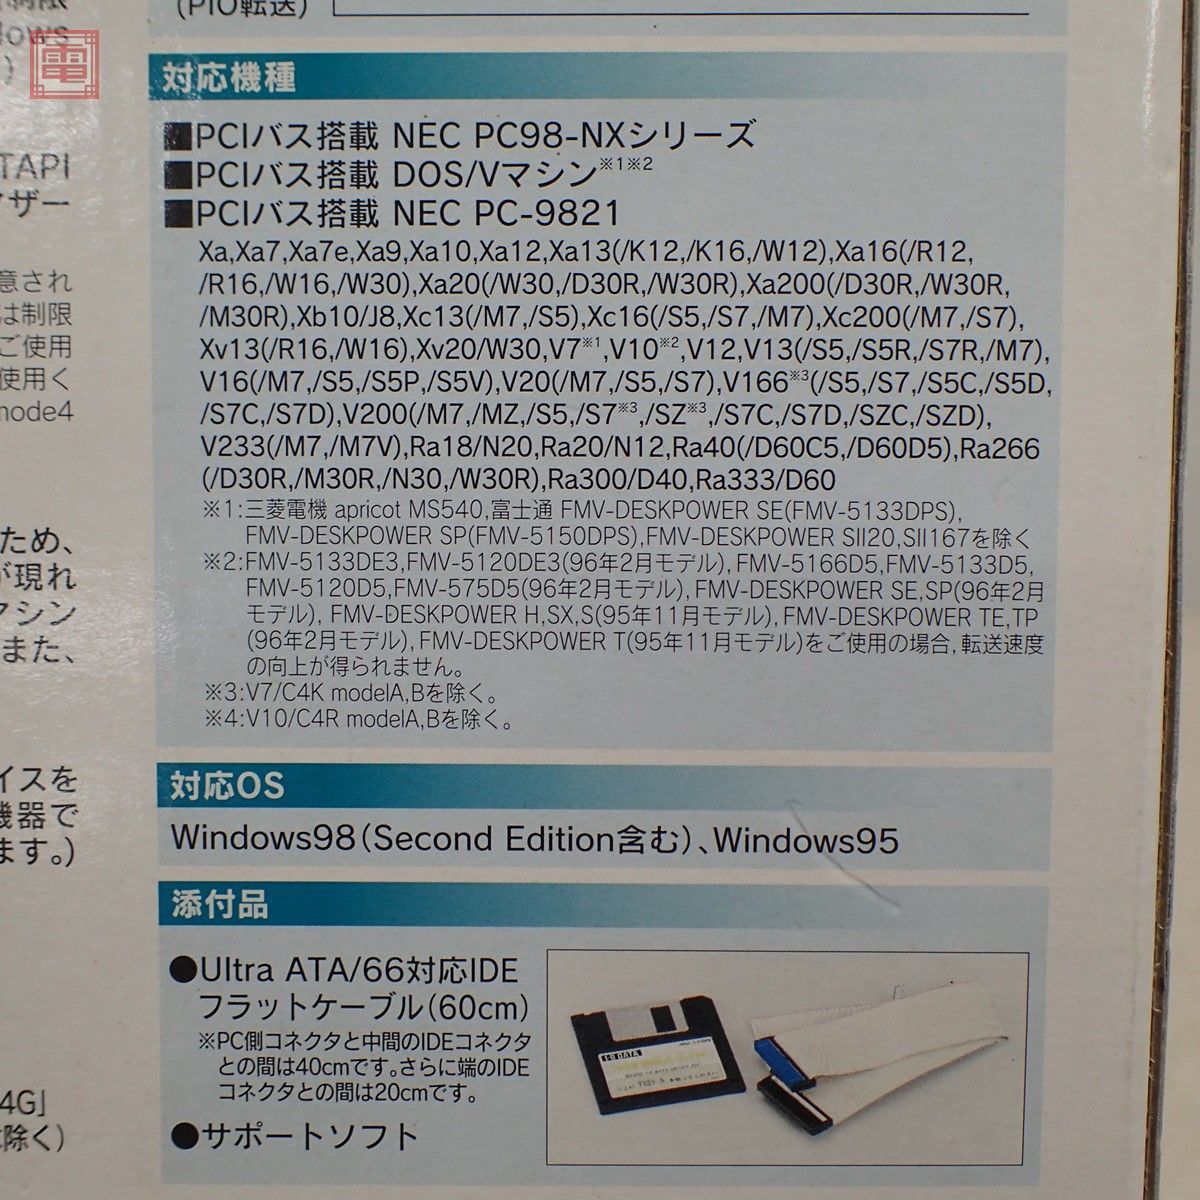 PC-9821・PC-98NX・DOS/V用 Ultra ATA/66インターフェイスボード UIDE-66 PCIバス用 アイオーデータ 箱説付 動作未確認【20_画像8